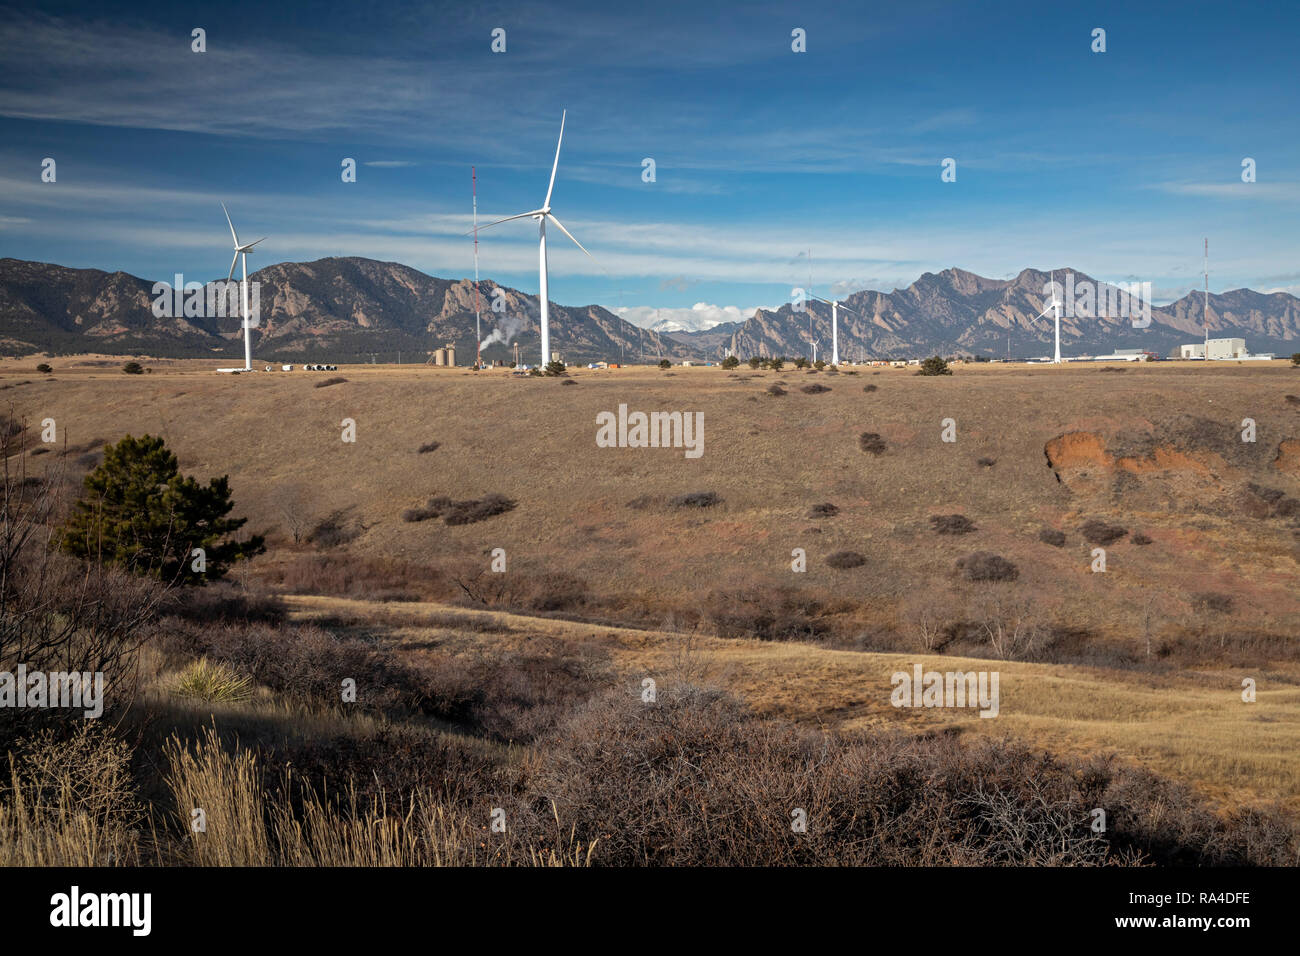 Denver, Colorado - das National Renewable Energy Laboratory National Wind Technology Center. Eine Kerbe in der Rocky Mountain Foothills Trichter suffici Stockfoto